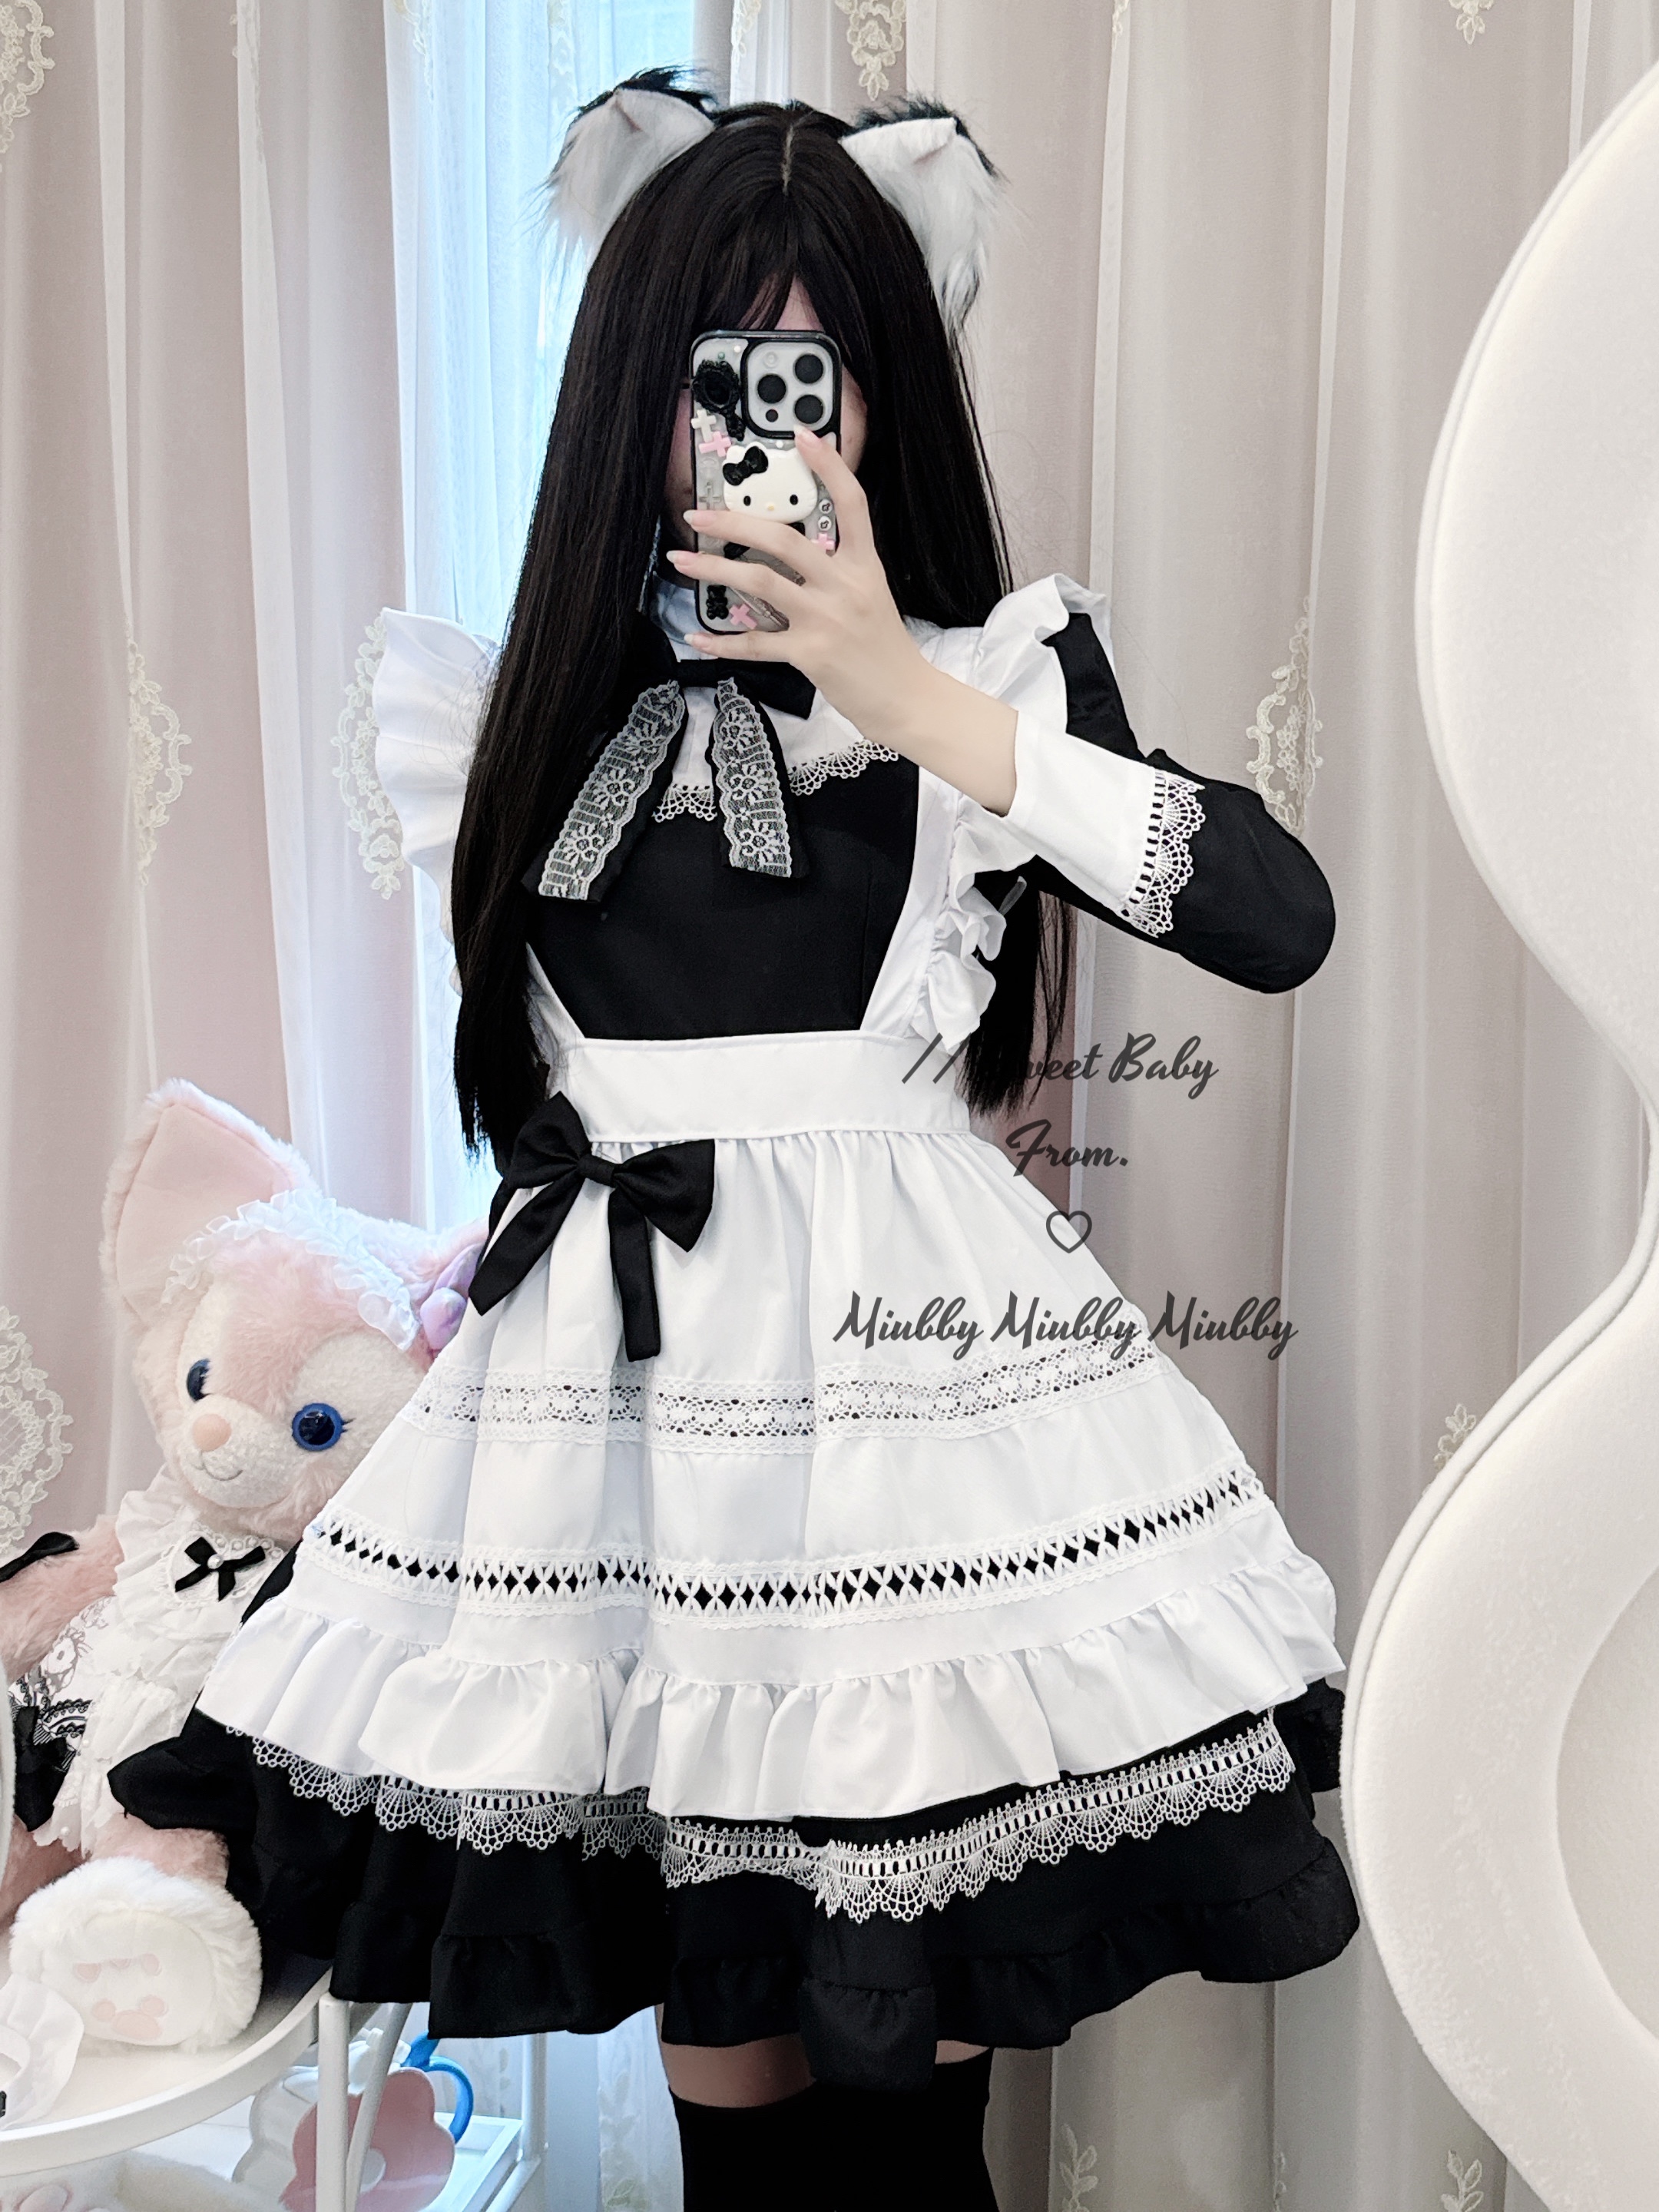 Miubby「安妮小姐」黑白蝴蝶结蕾丝长袖Lolita贵族女仆装连衣裙